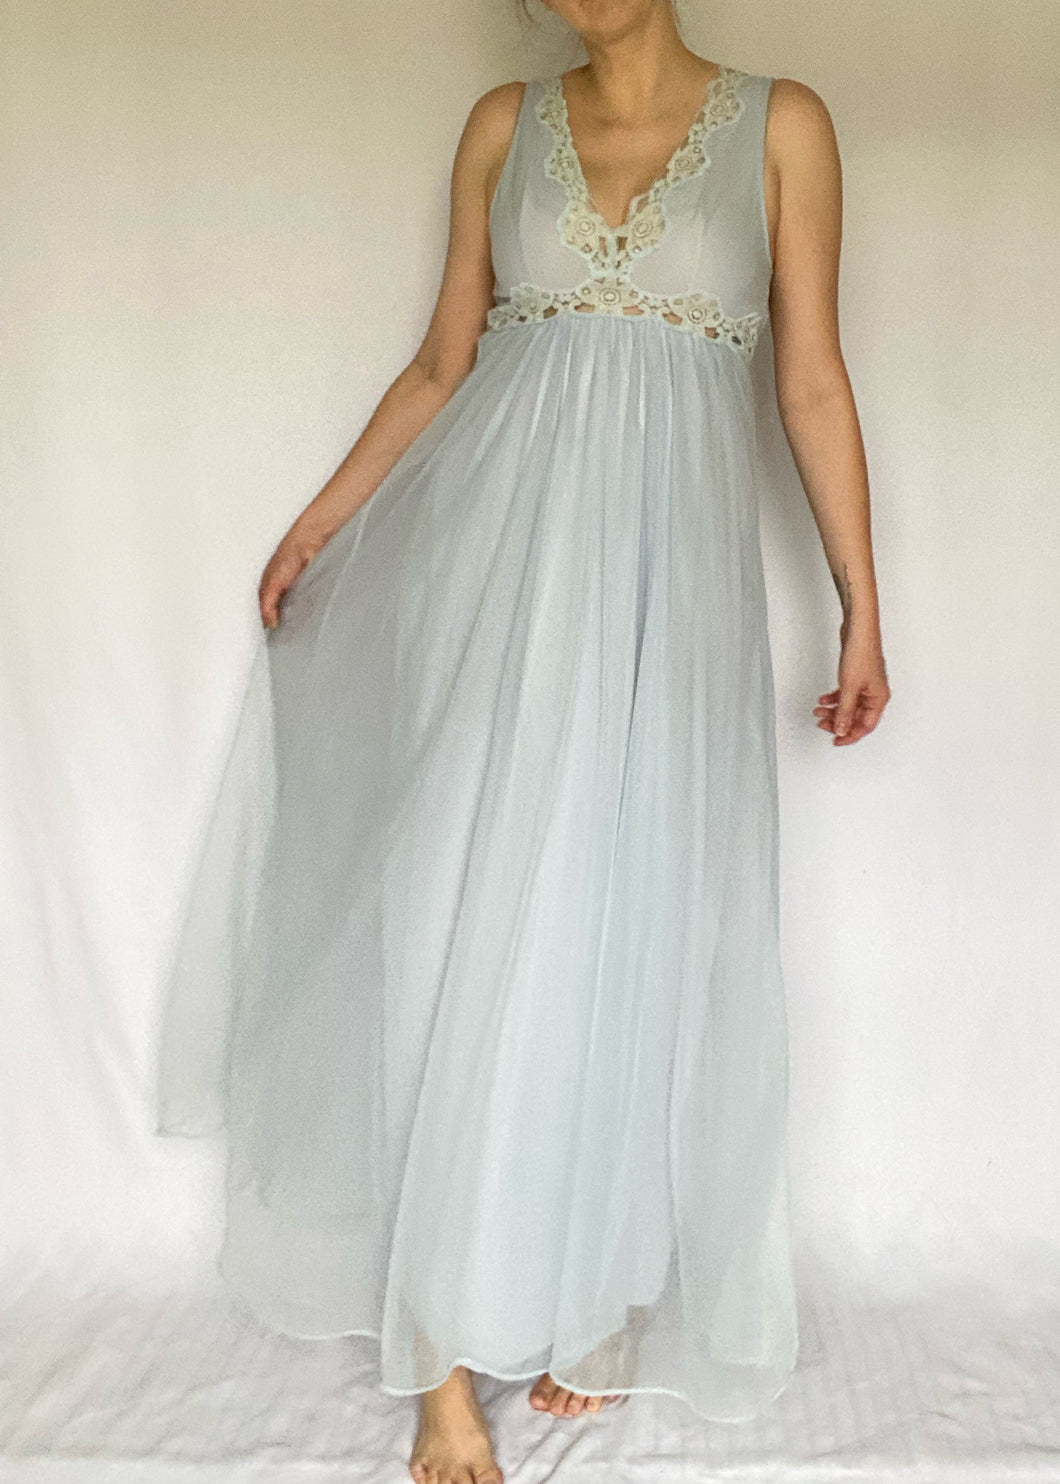 70's Cinderella Blue Chiffon Nightgown